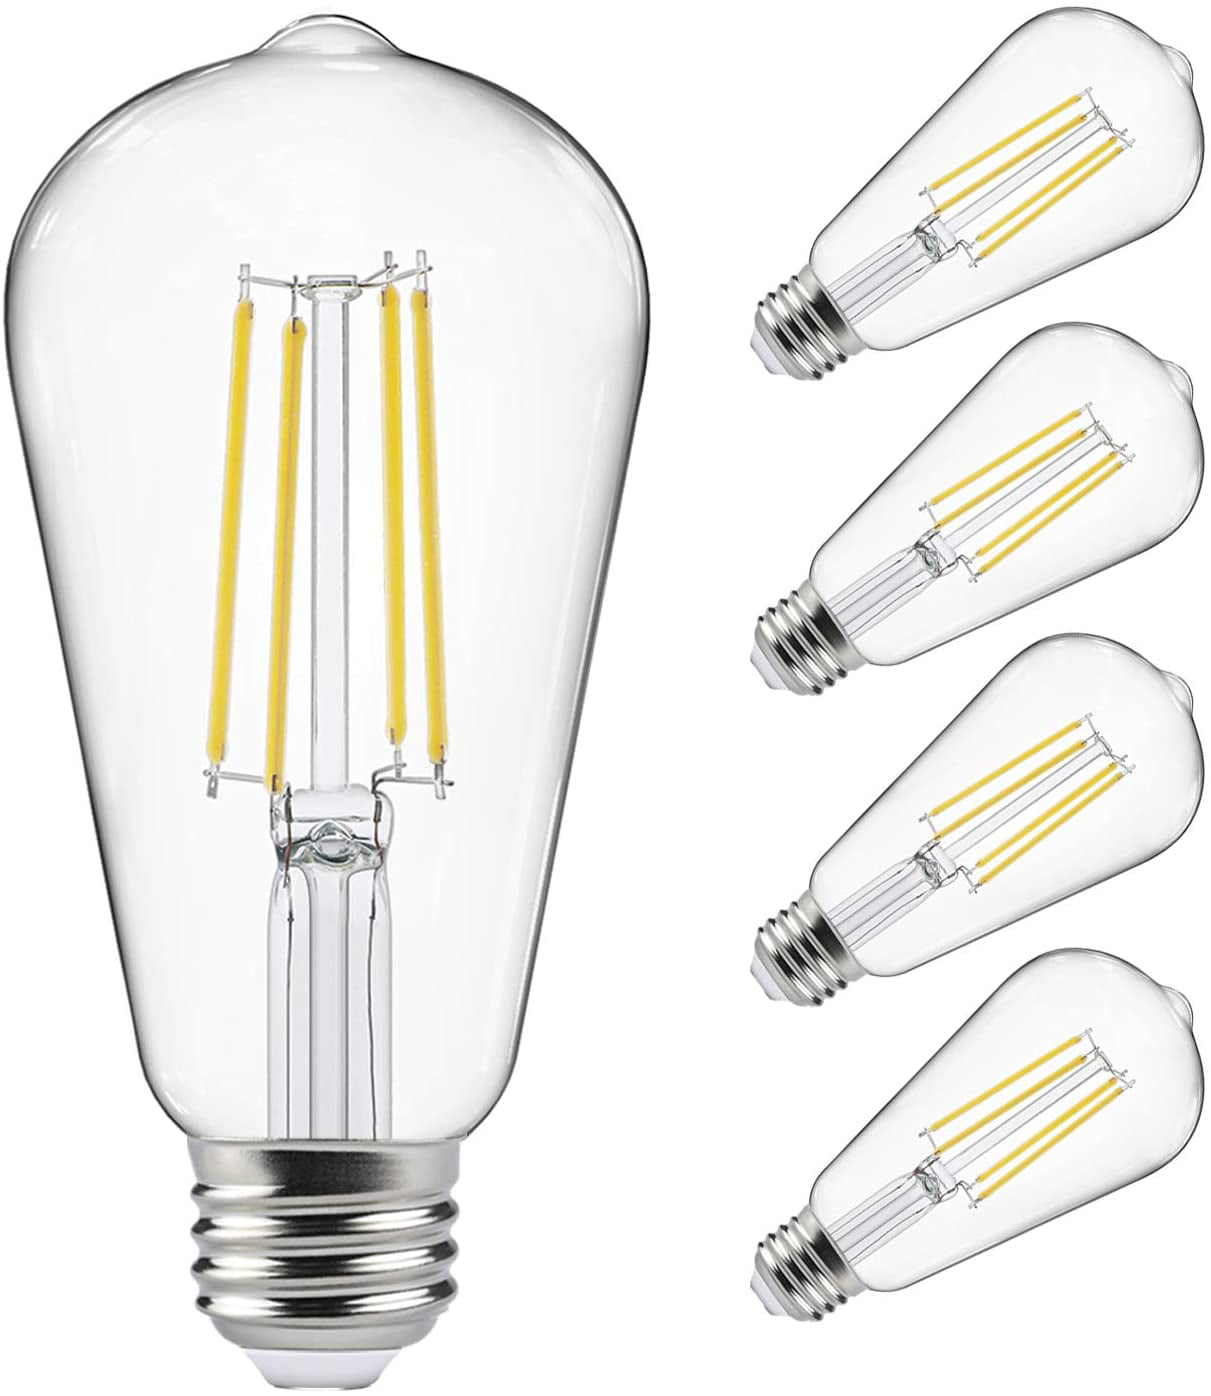 Ascher Vintage LED Edison Bulbs 6W High Brightness Daylight... Equivalent 60W 